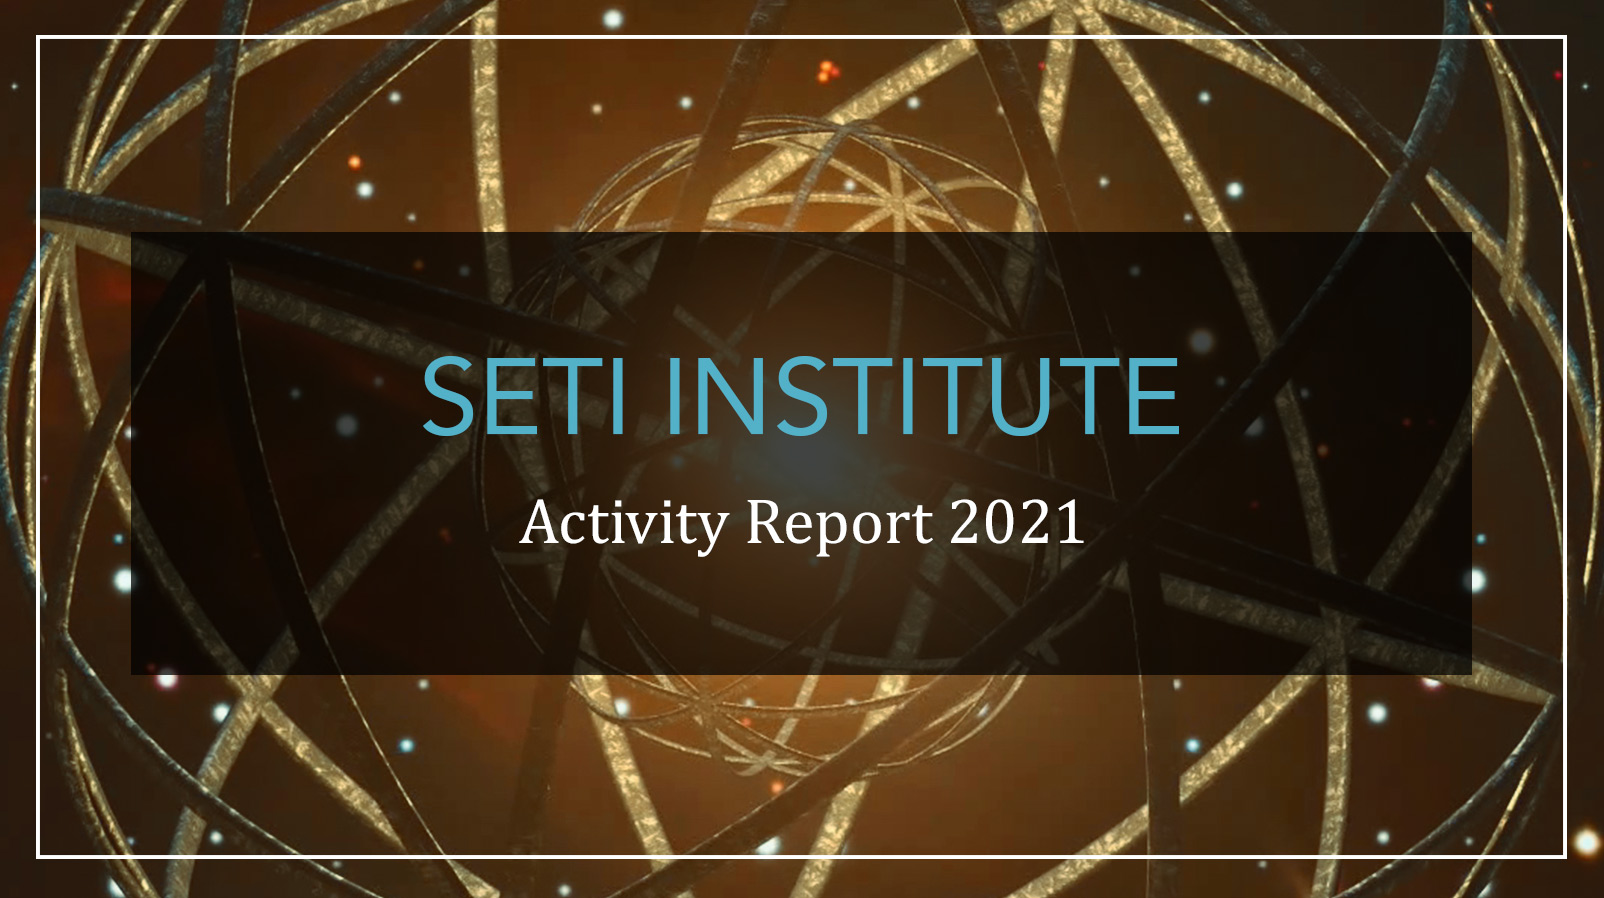 Activity Report 2021